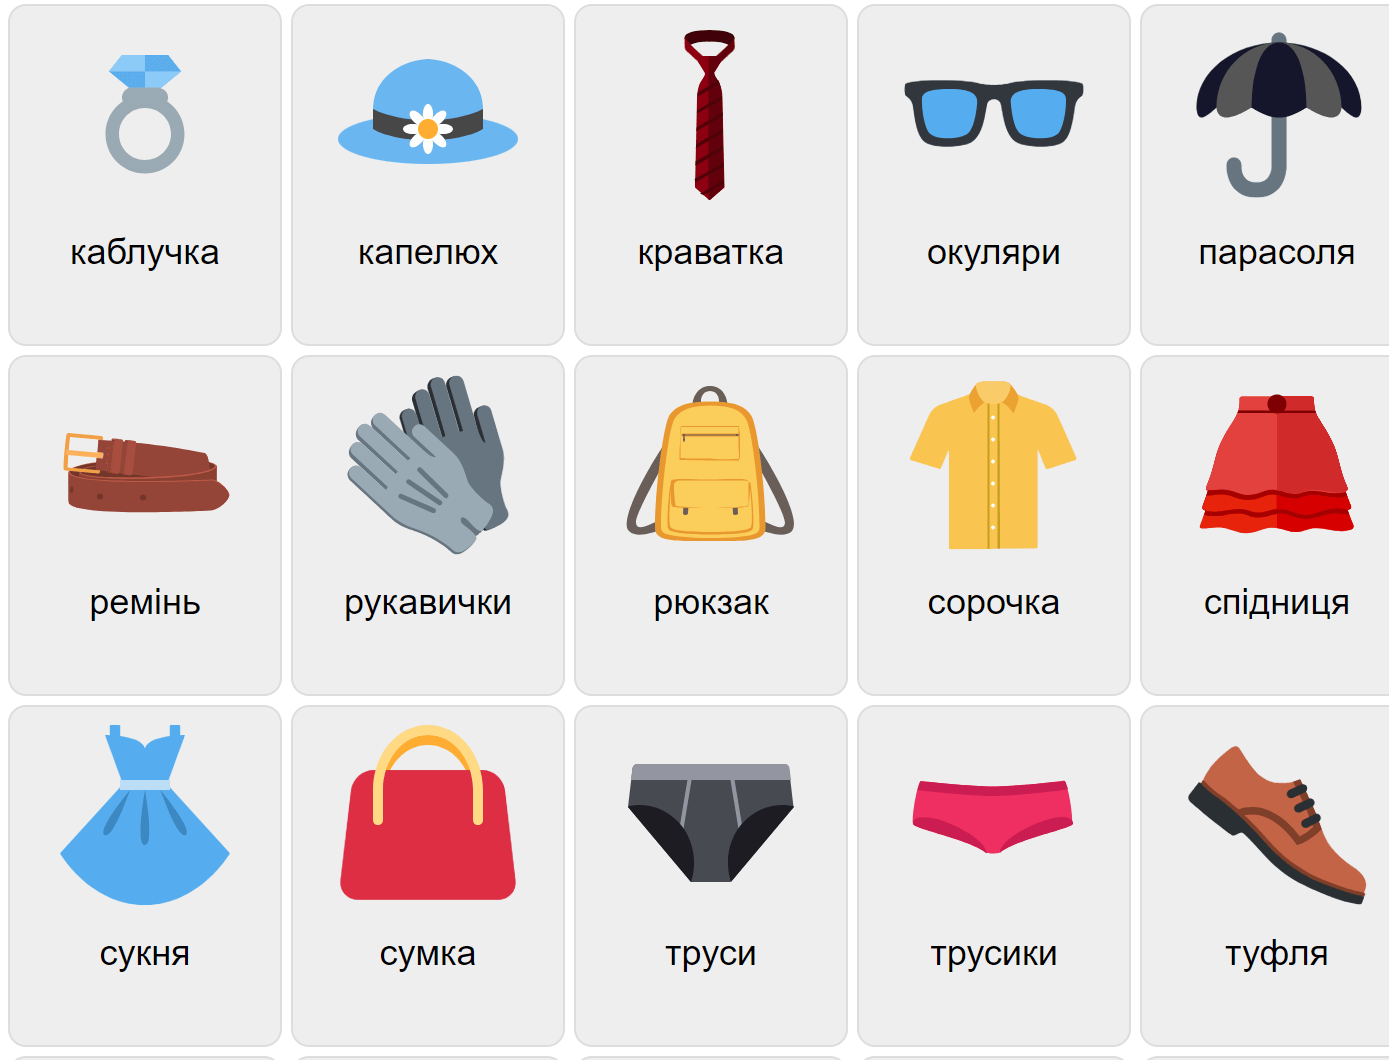 Одежда на украинском языке